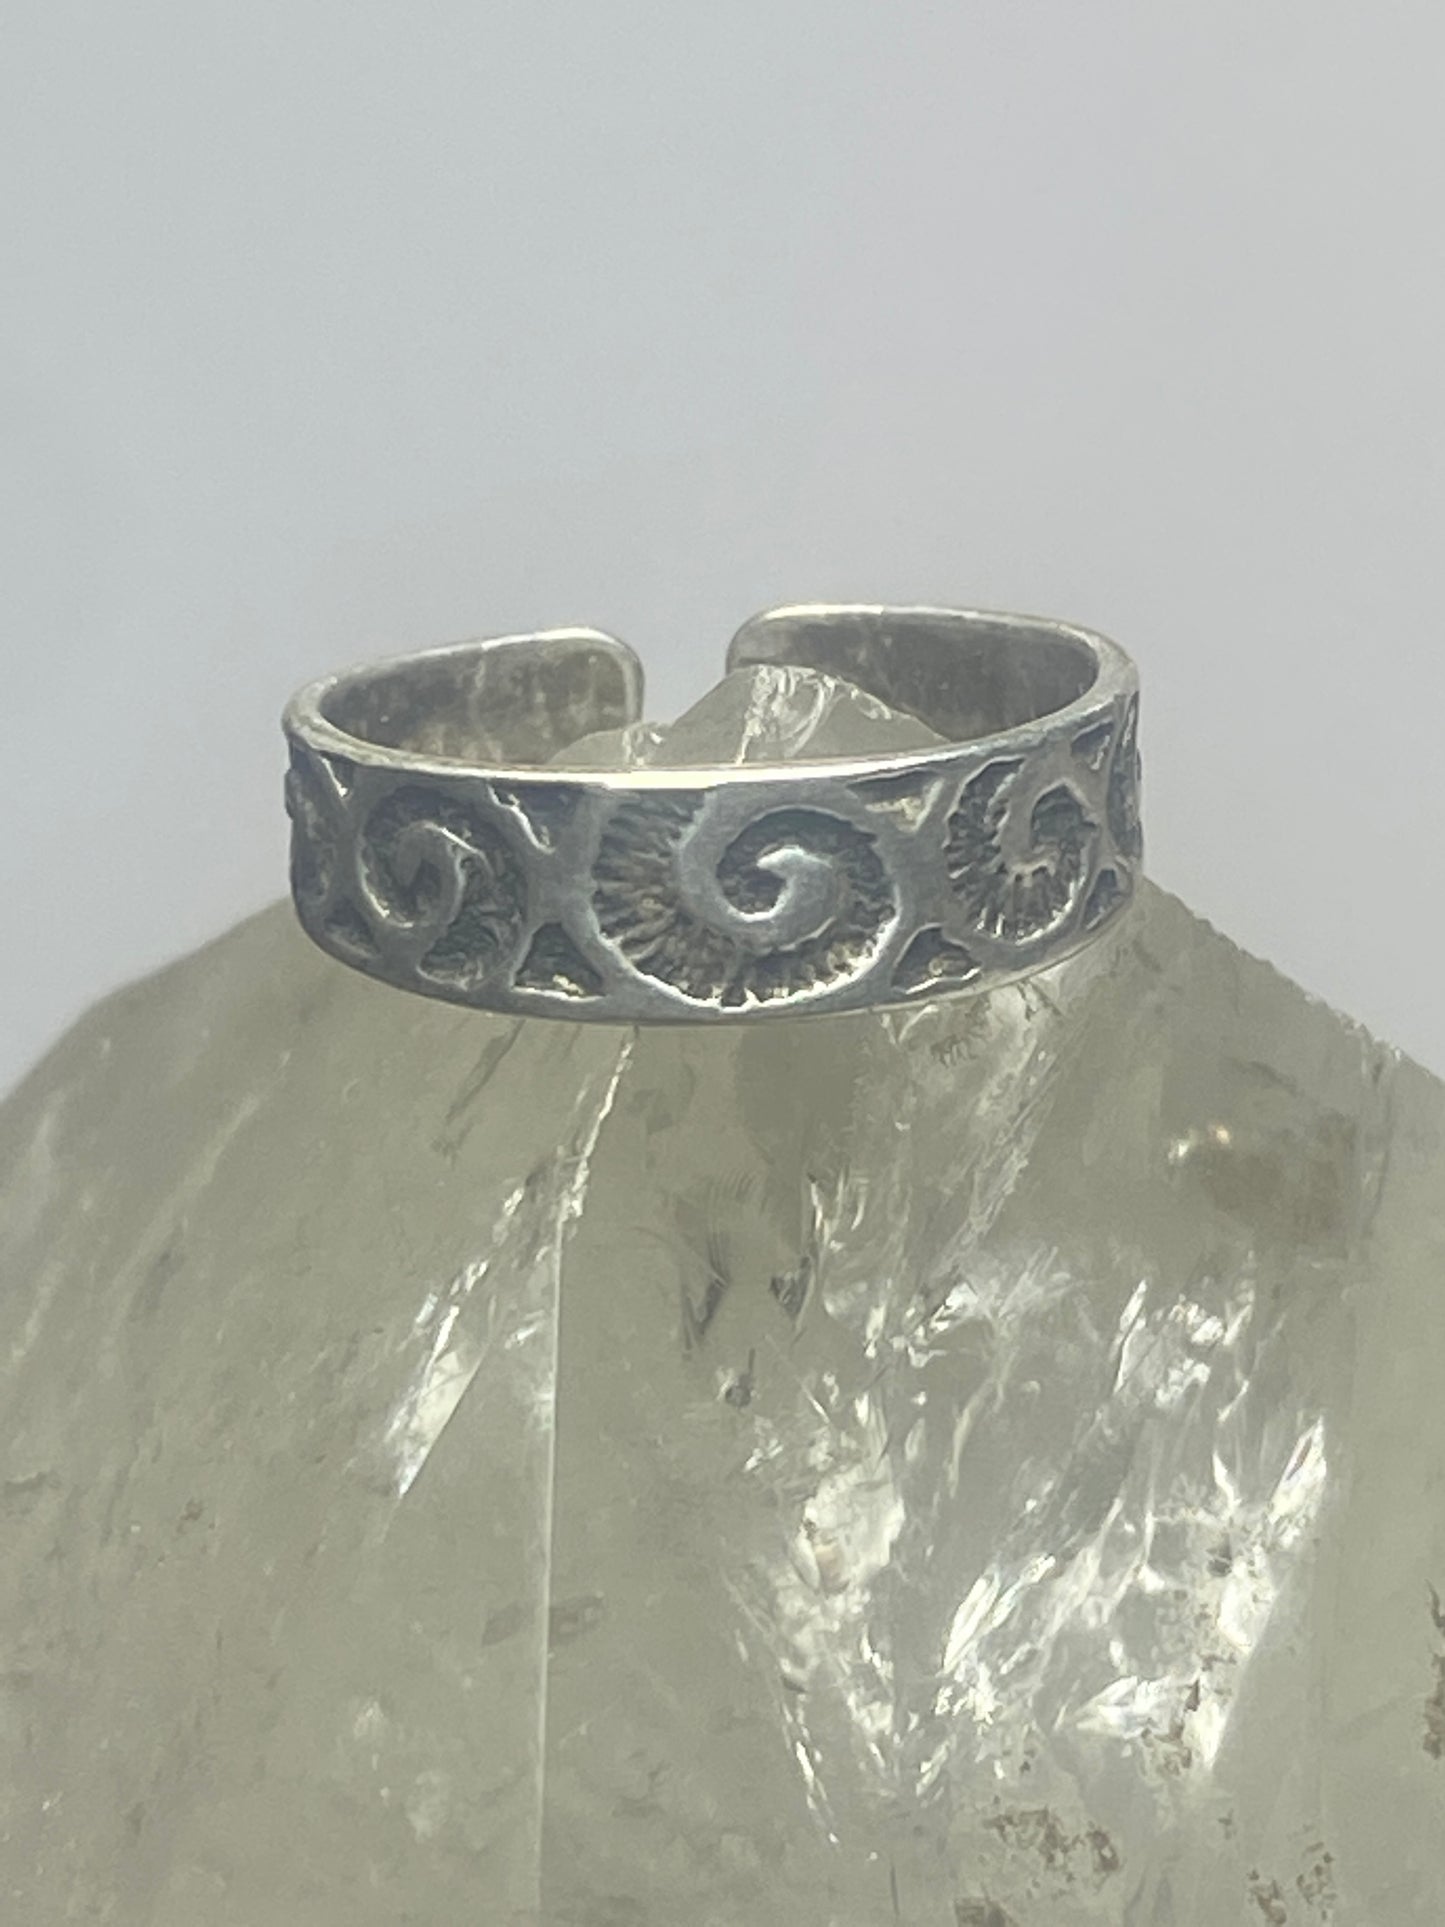 Toe ring spiral band sterling silver women girls